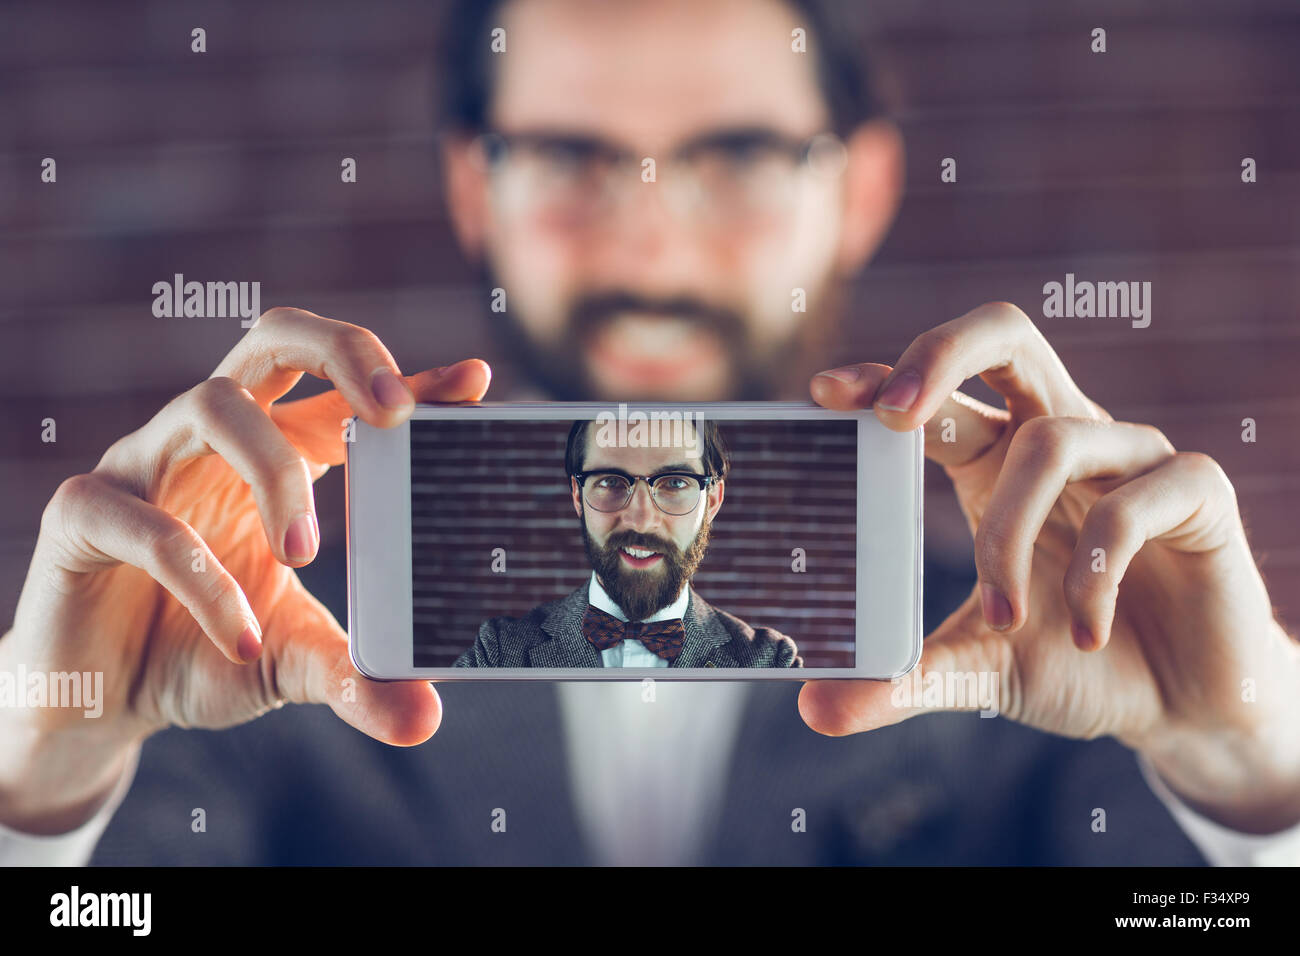 Portrait of man in cellphone taking selfie Stock Photo